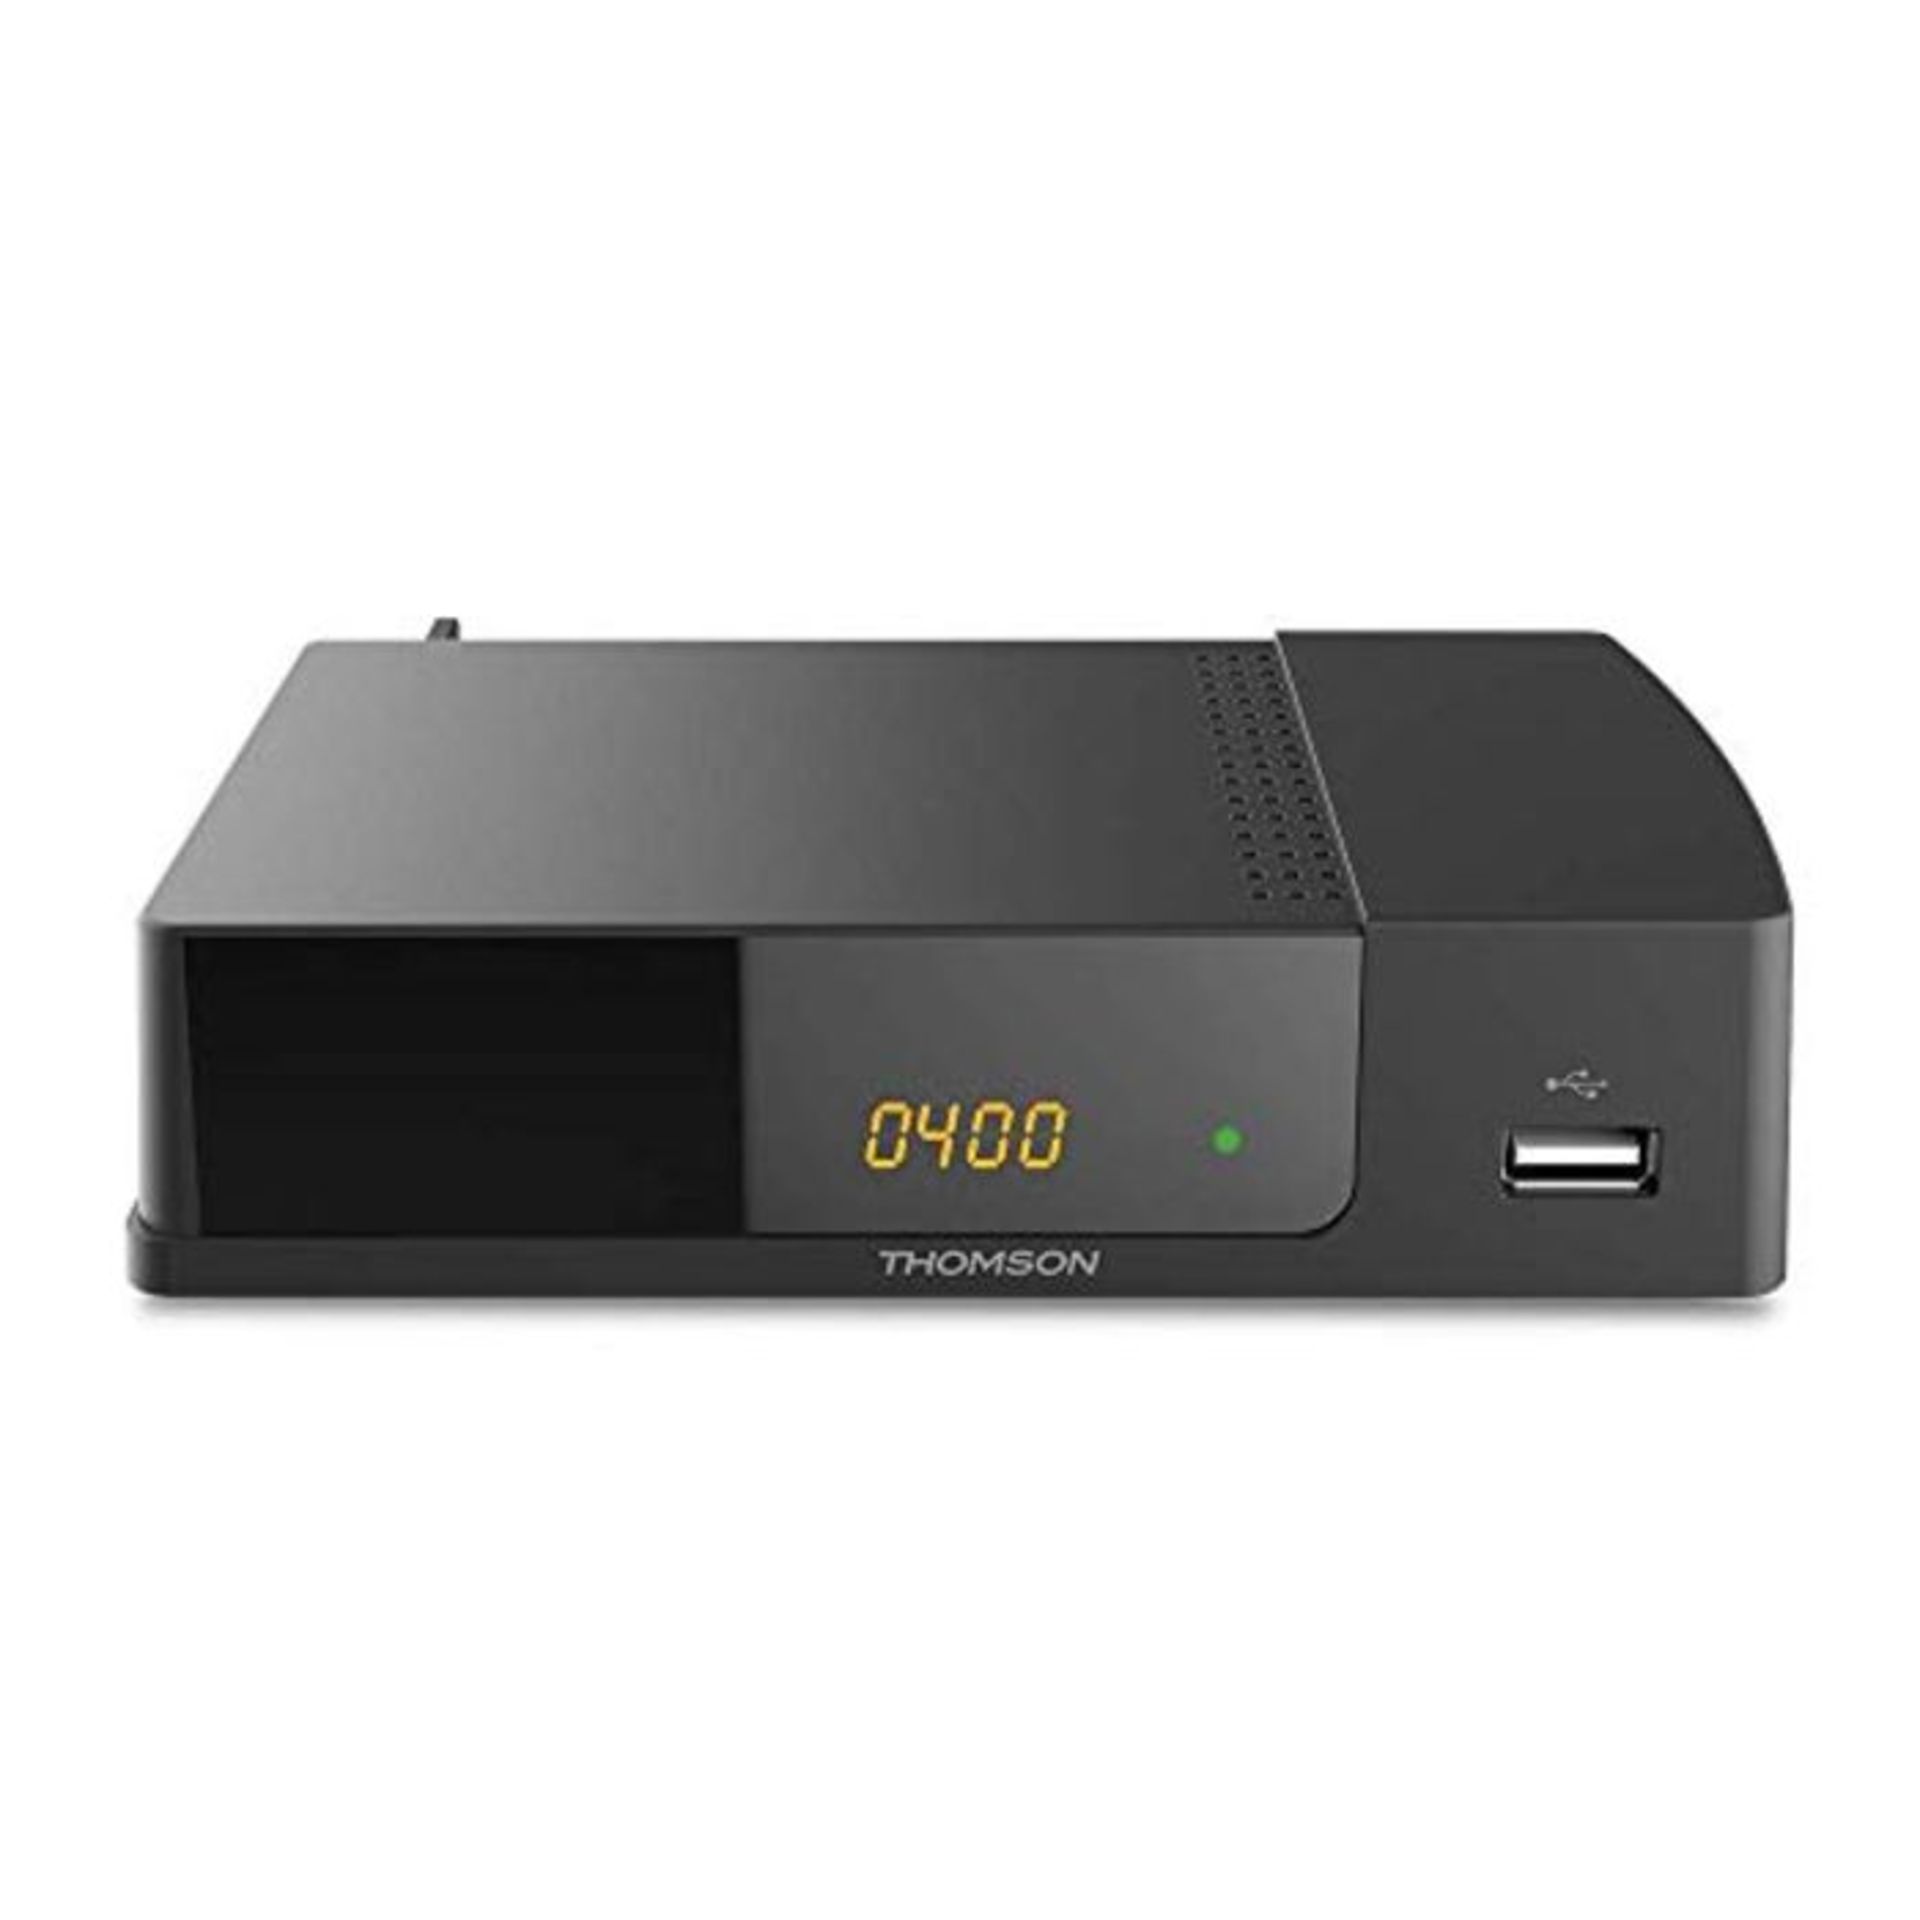 Terminal DVB-T2 HEVCTerrestre, HDMI, Péritel, Spdif coaxial, USB PVR, RSS par etherne